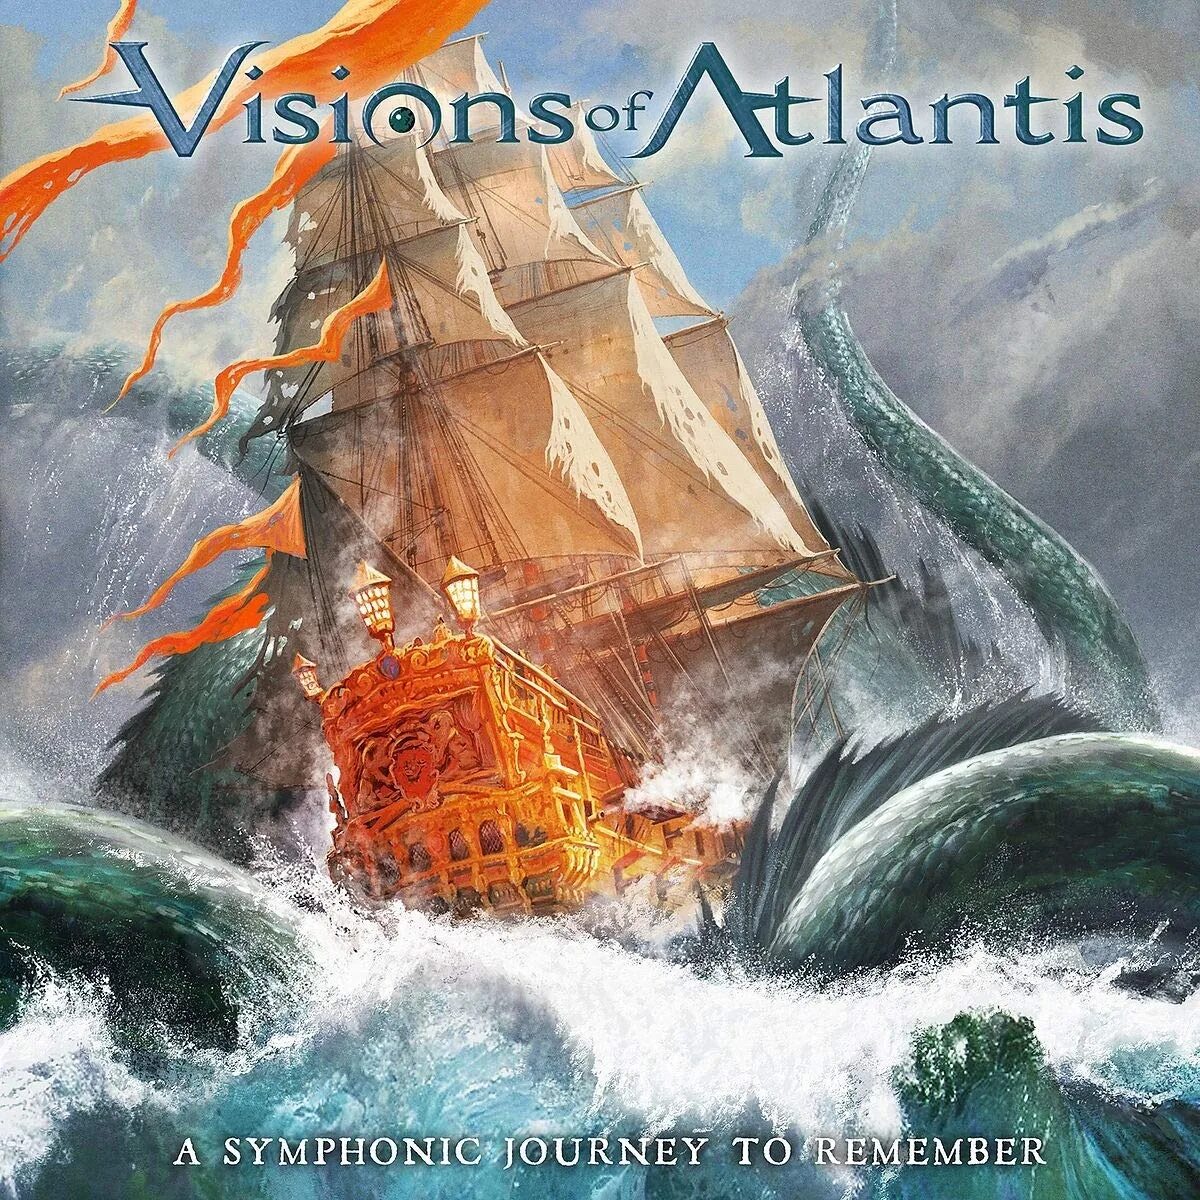 Группа Visions of Atlantis. Обложки CD Visions of Atlantis. Visions of Atlantis the Deep the Dark. Visions of Atlantis Nicole. Visions of atlantis armada